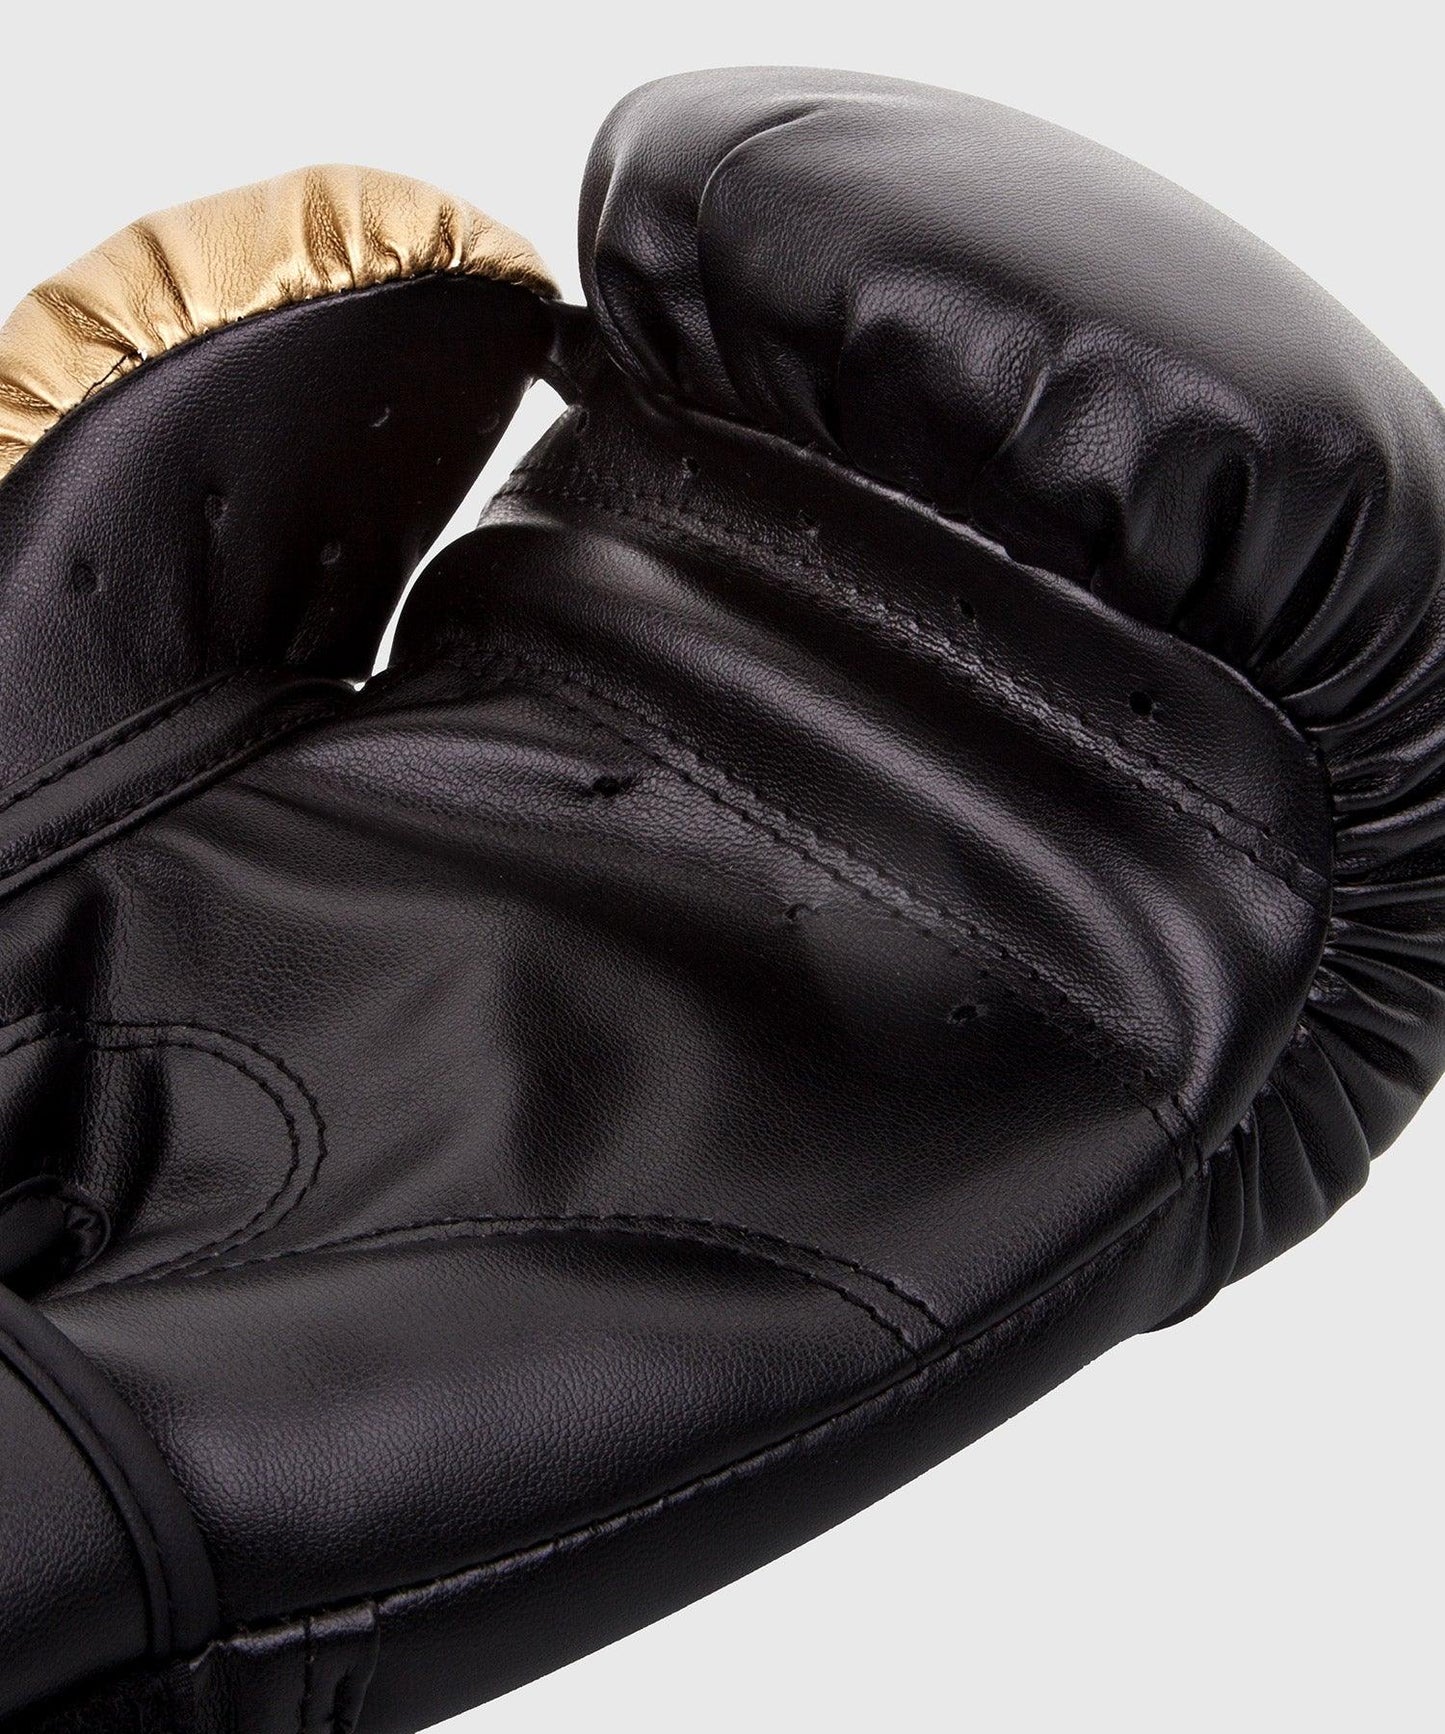 Venum Contender Boxing Gloves - Black/Gold Picture 3